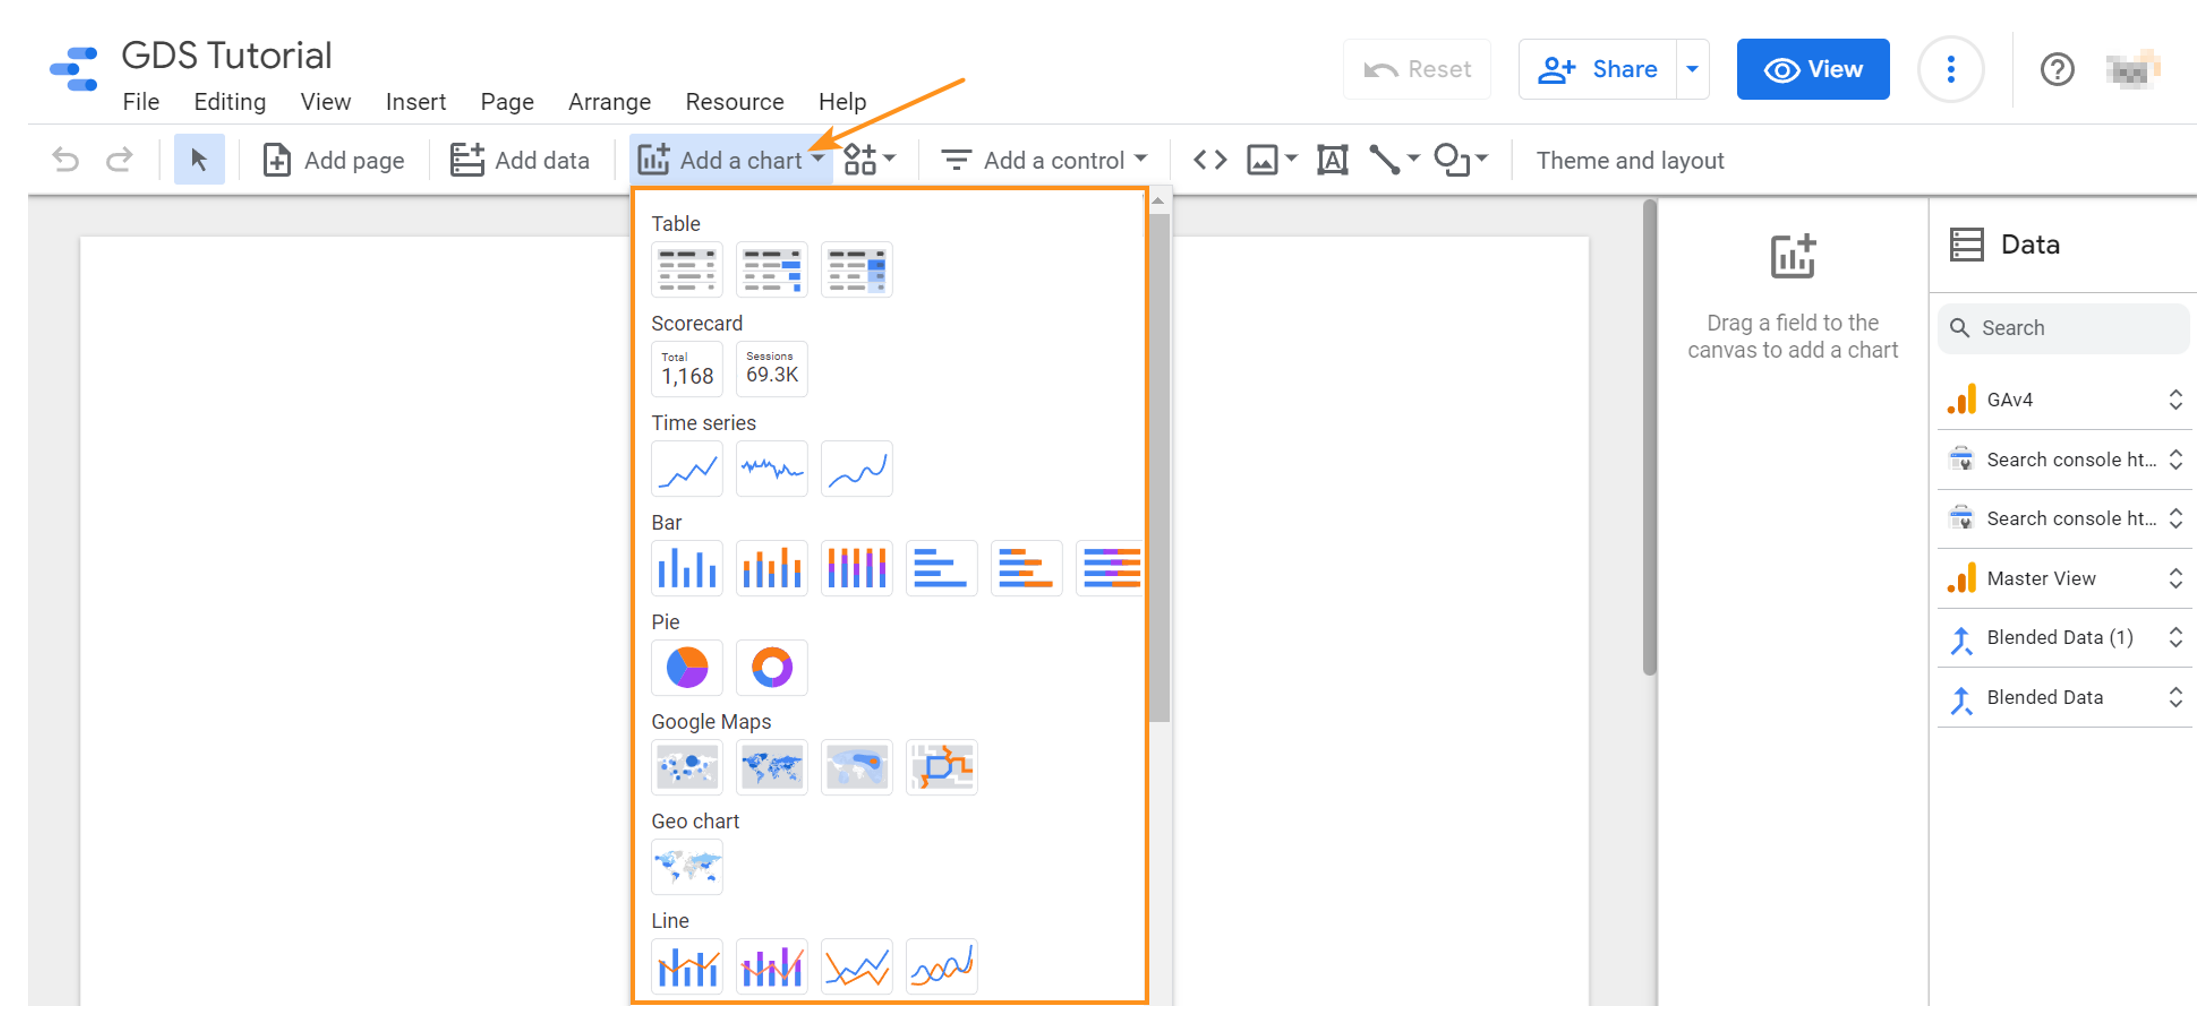 6. How to add charts on Google Data Studio